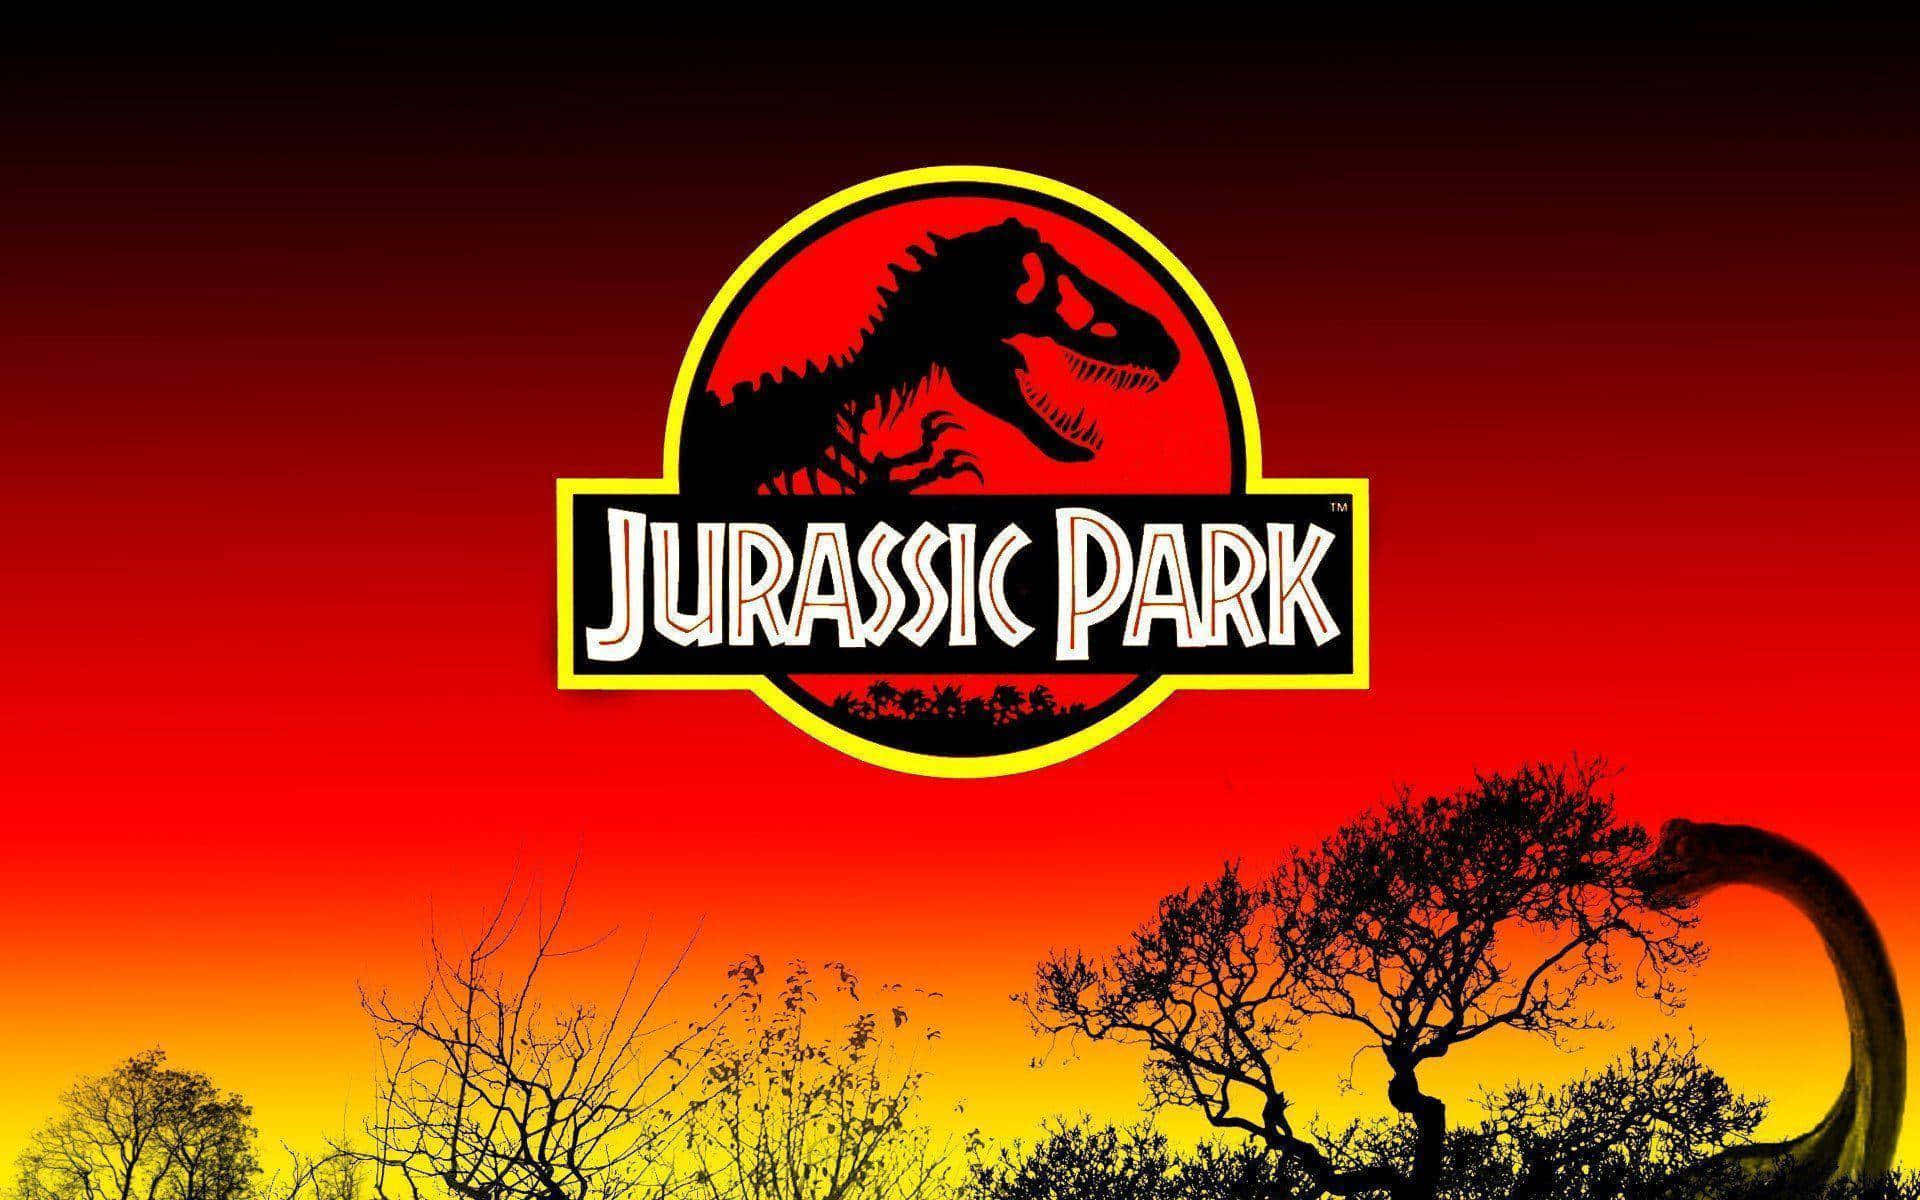 "Raptor Vision: Encountering the Dinosaurs at Jurassic Park"